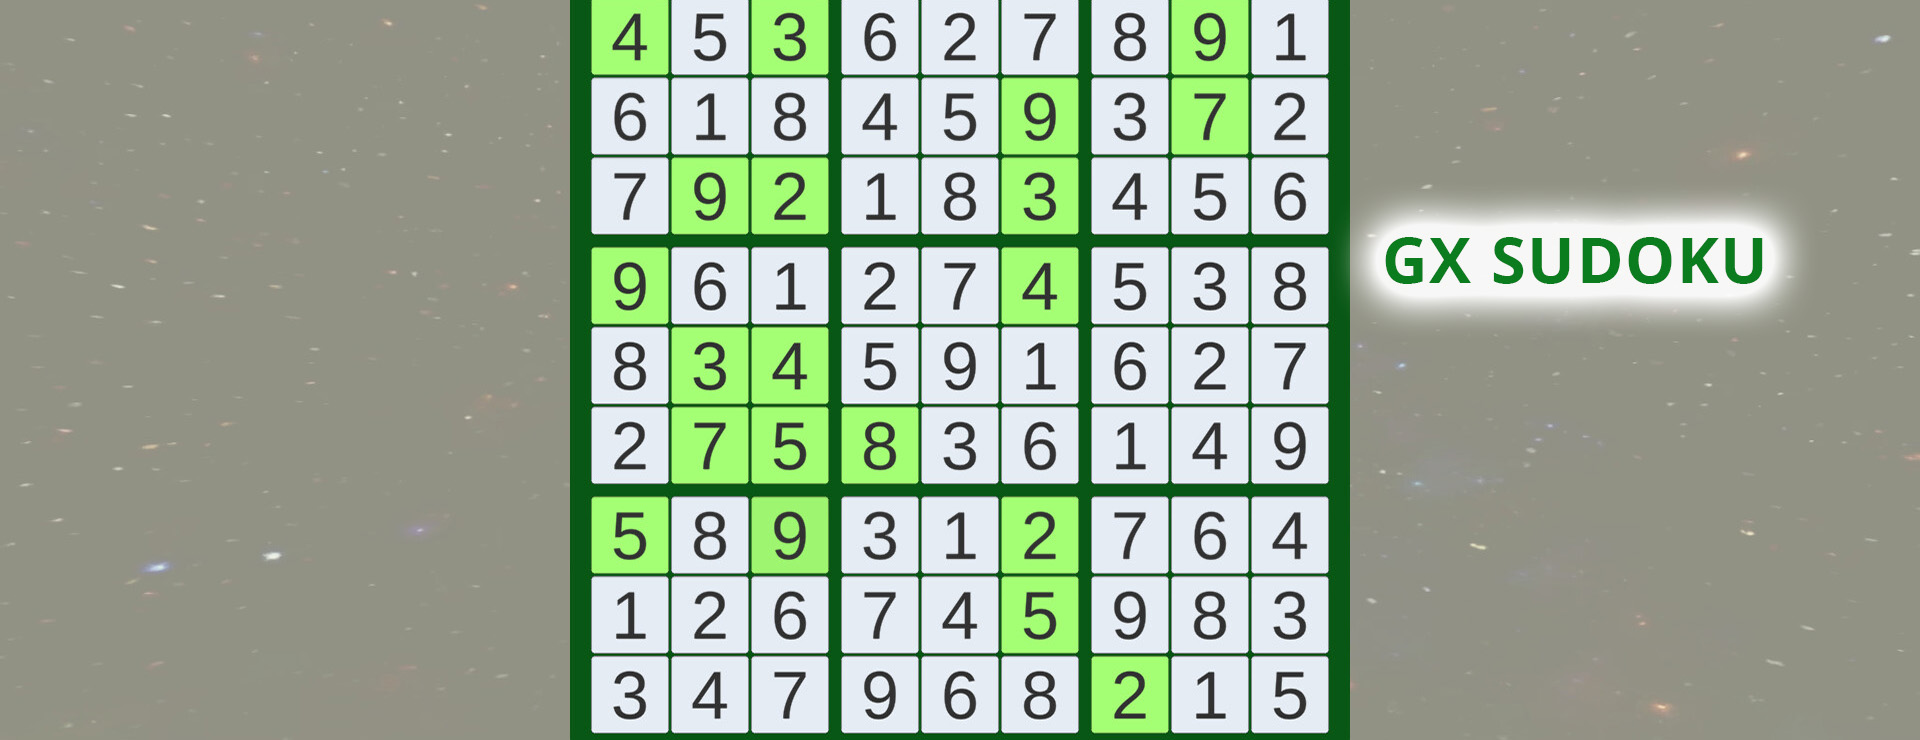 GX Sudoku - カジュアル ゲーム